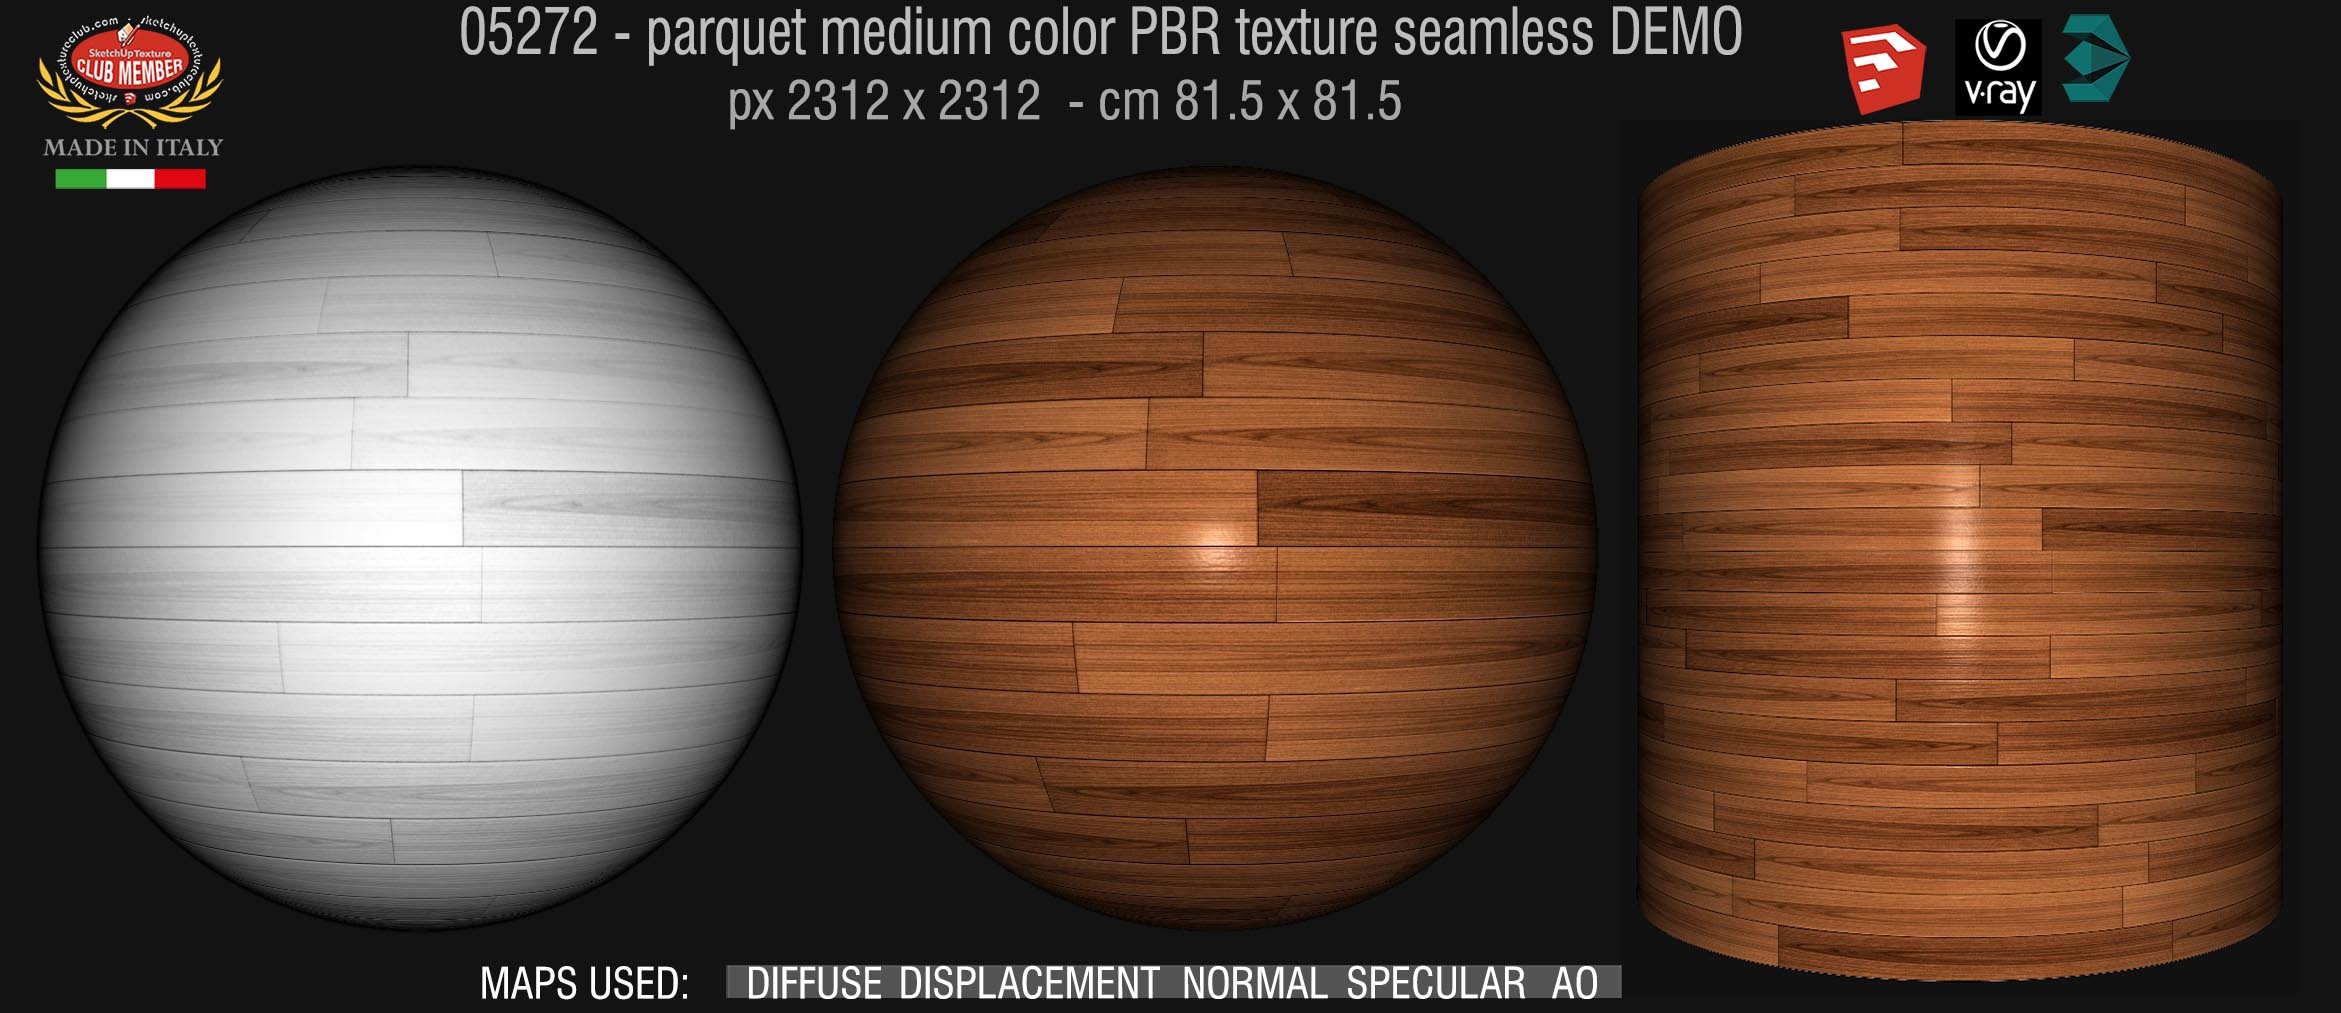 05272 parquet medium color PBR texture seamless DEMO